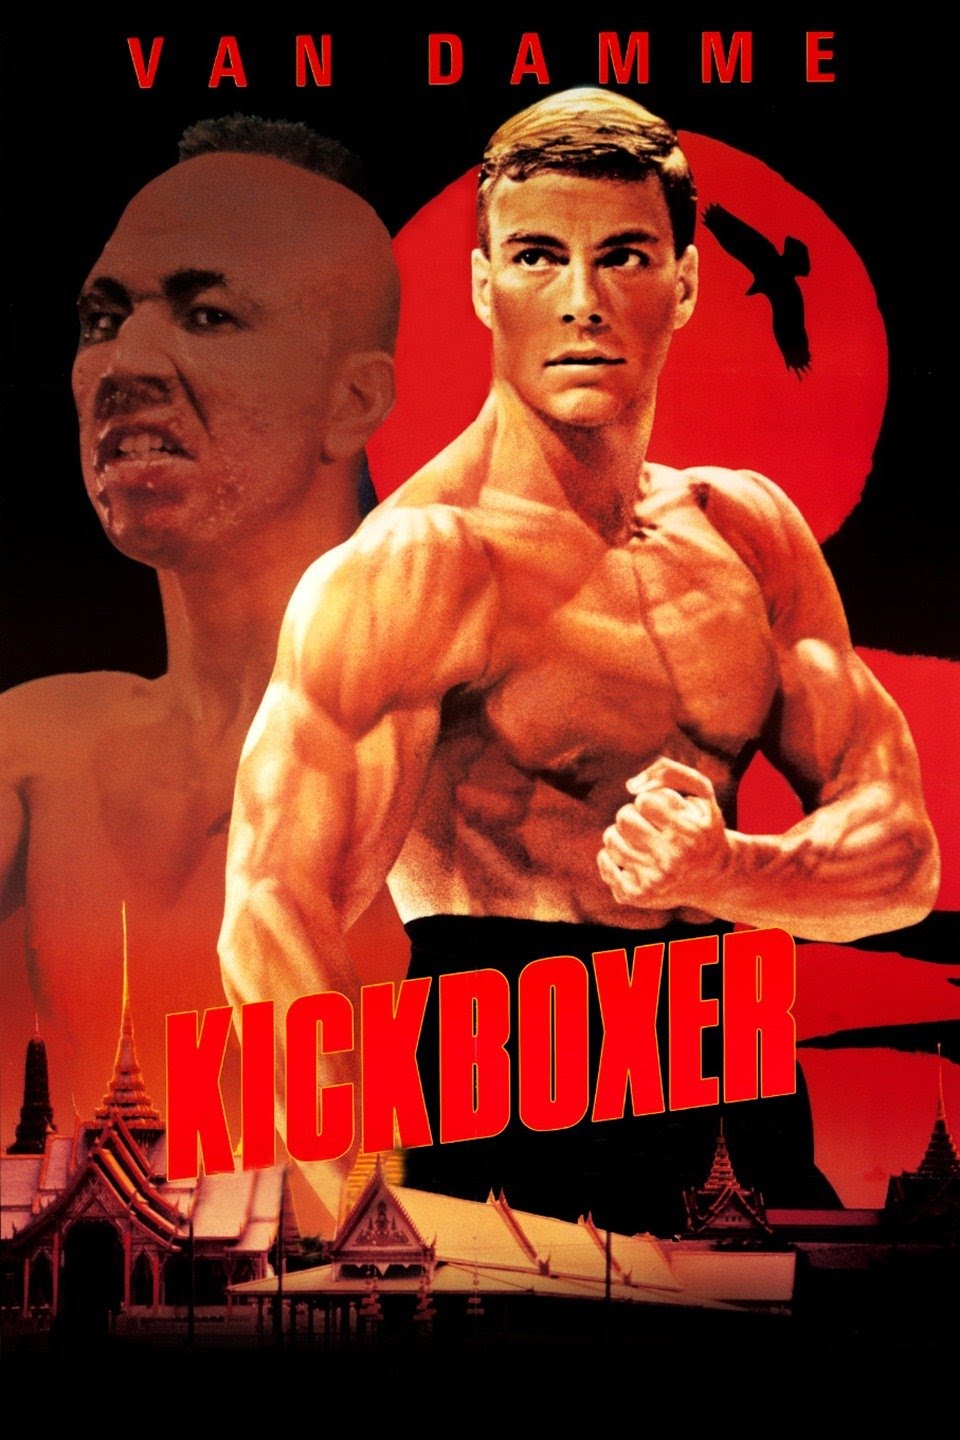 Stiahni si Filmy CZ/SK dabing Kickboxer (1989)(EN/CZ)[1080p]